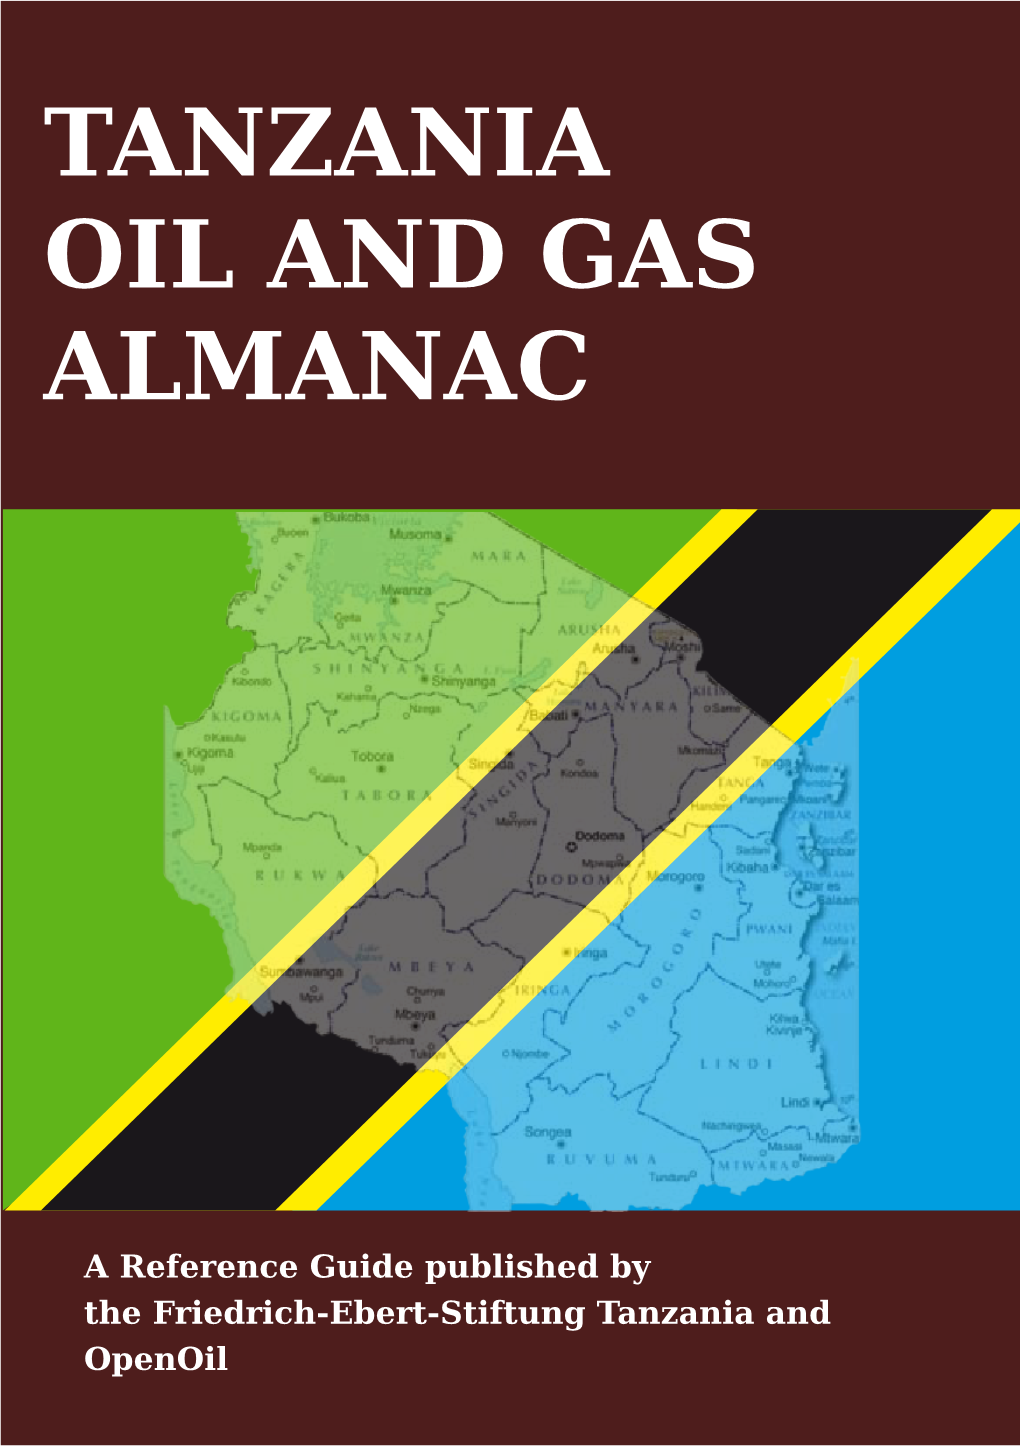 TANZANIA OIL and GAS ALMANAC TANZANIA OIL and GAS ALMANAC Print Edition June 2015